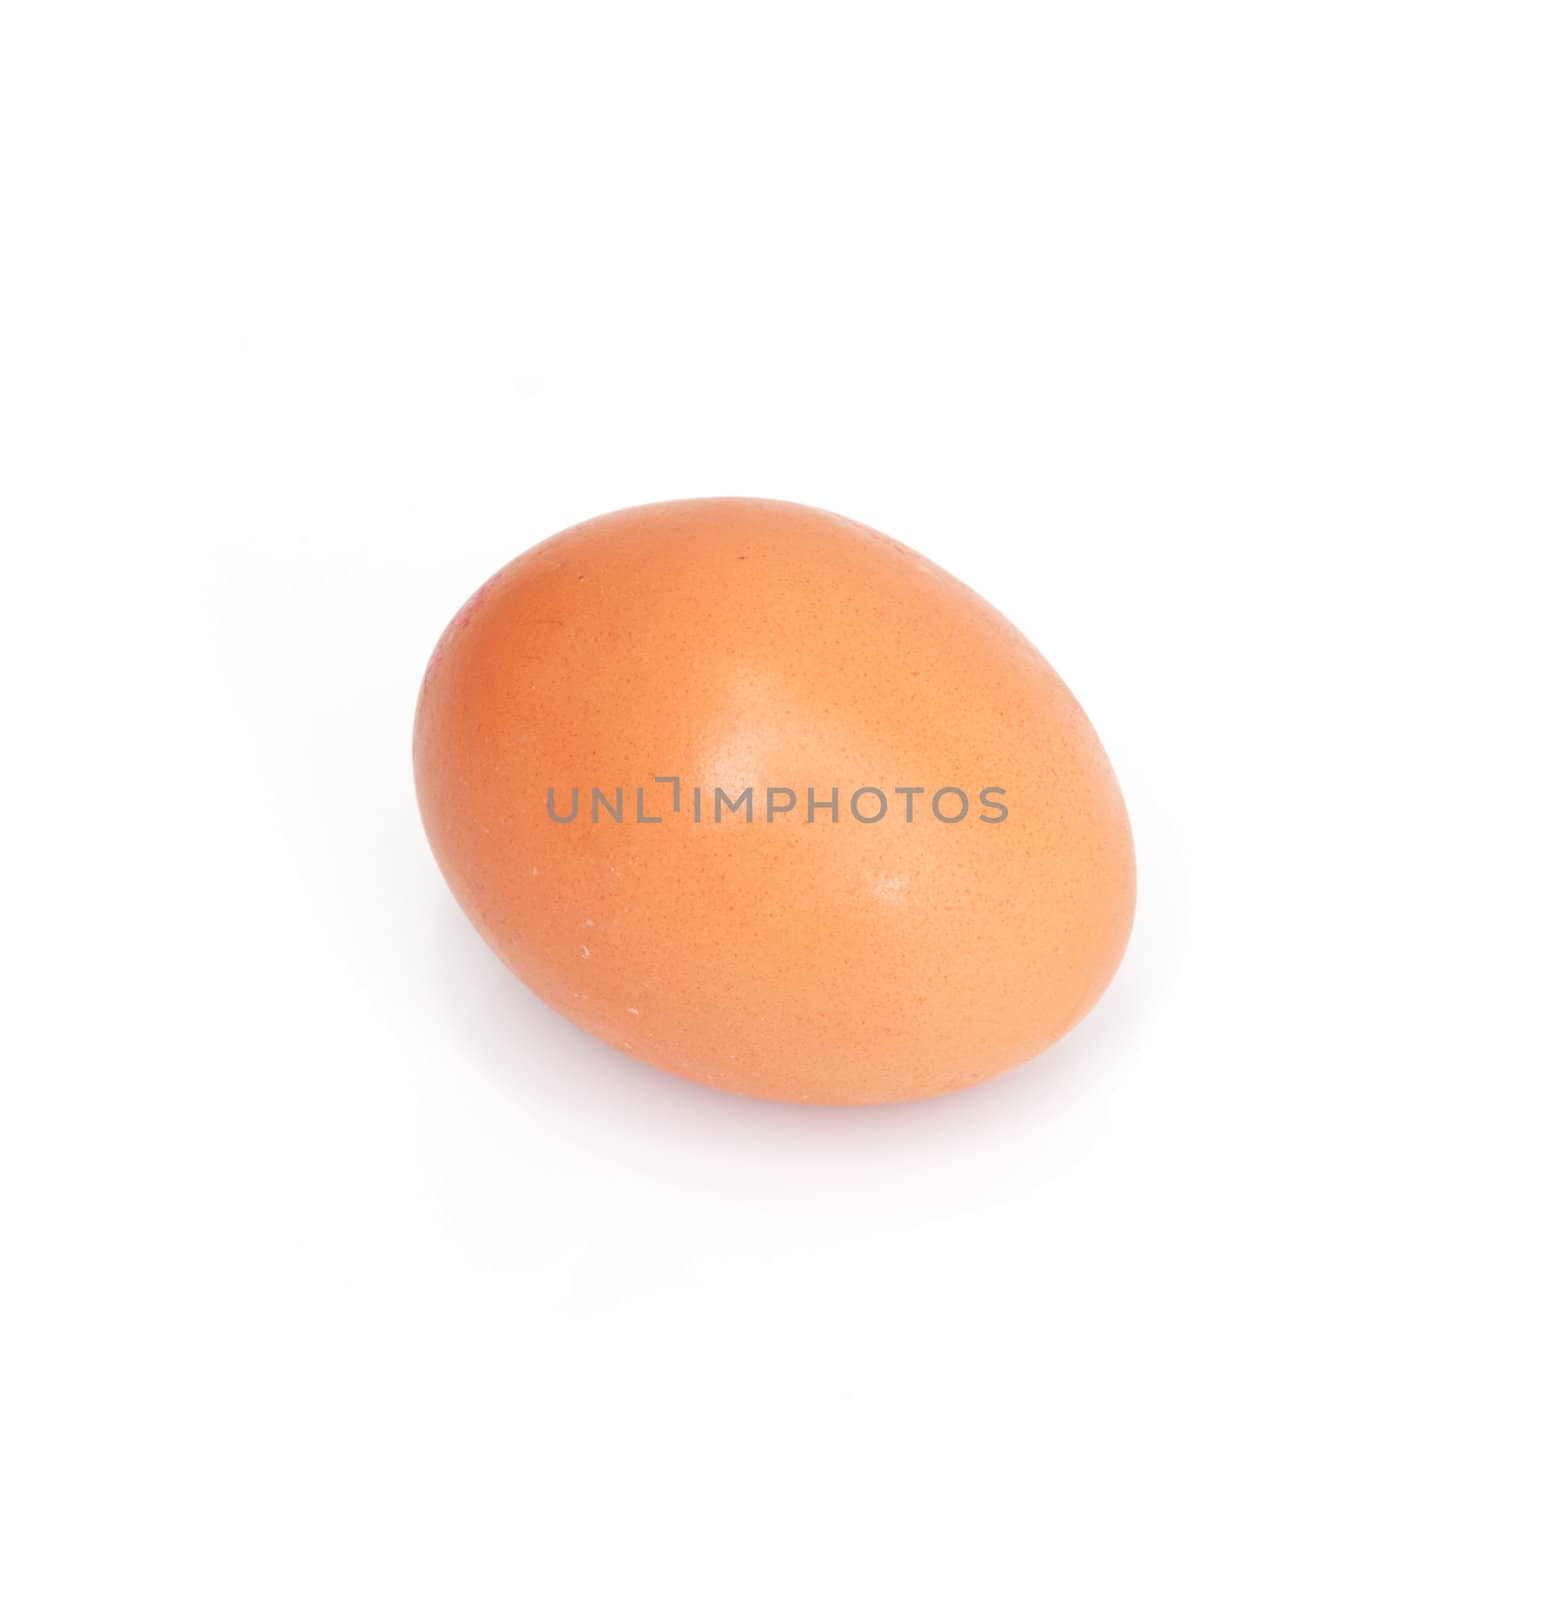 One egg on white background  by schankz